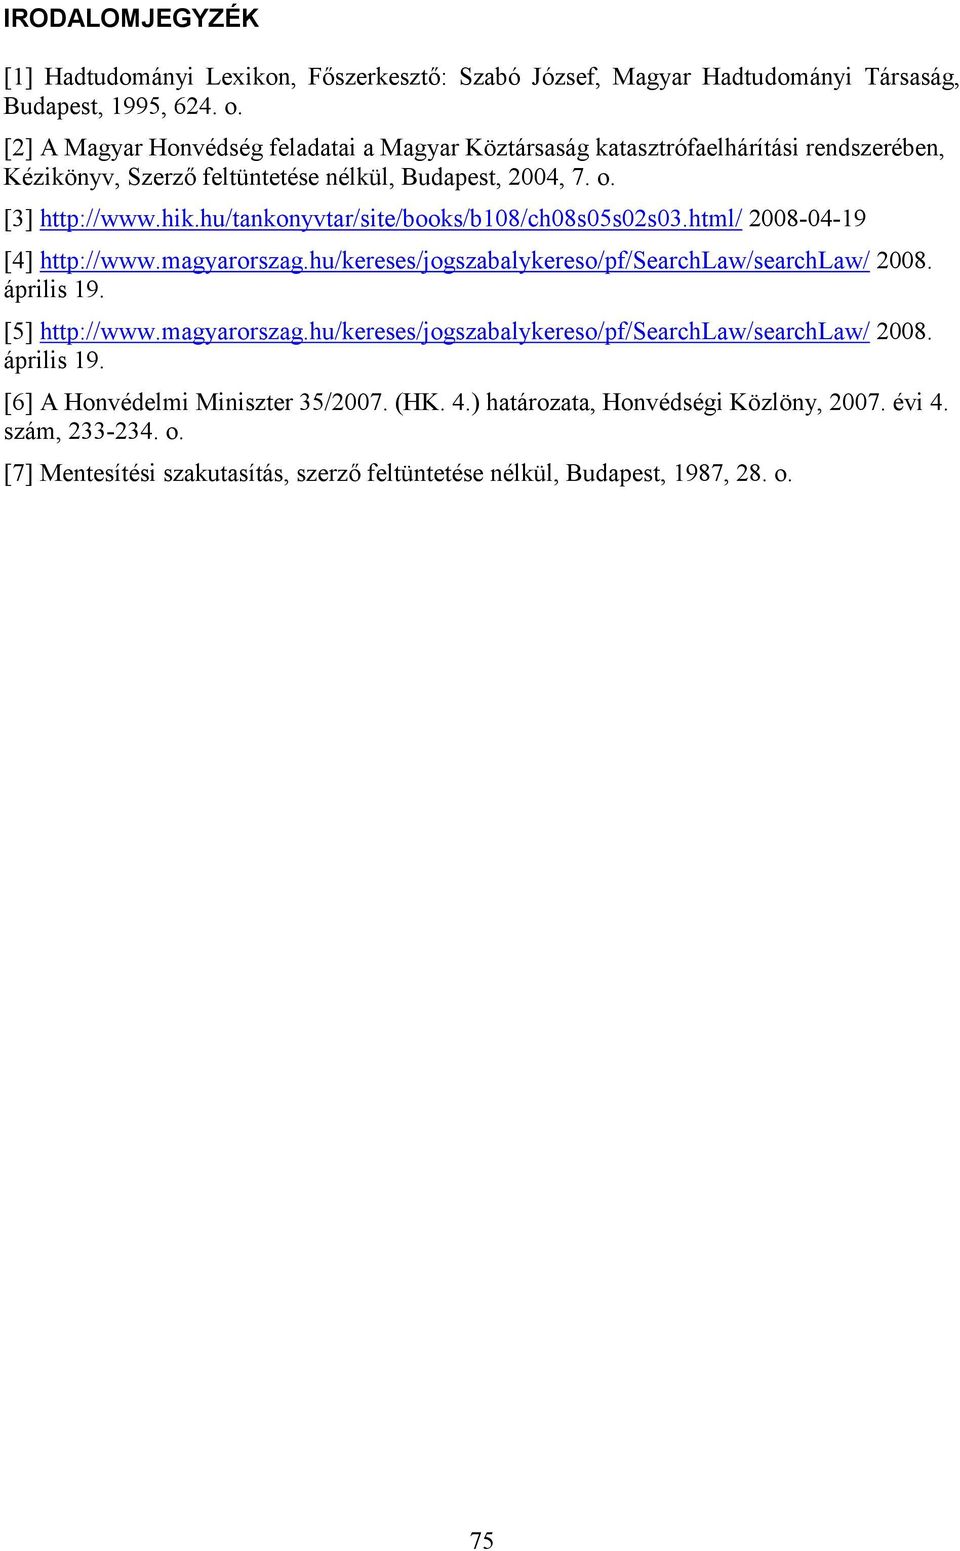 hu/tankonyvtar/site/books/b108/ch08s05s02s03.html/ 2008-04-19 [4] http://www.magyarorszag.hu/kereses/jogszabalykereso/pf/searchlaw/searchlaw/ 2008. április 19. [5] http://www.